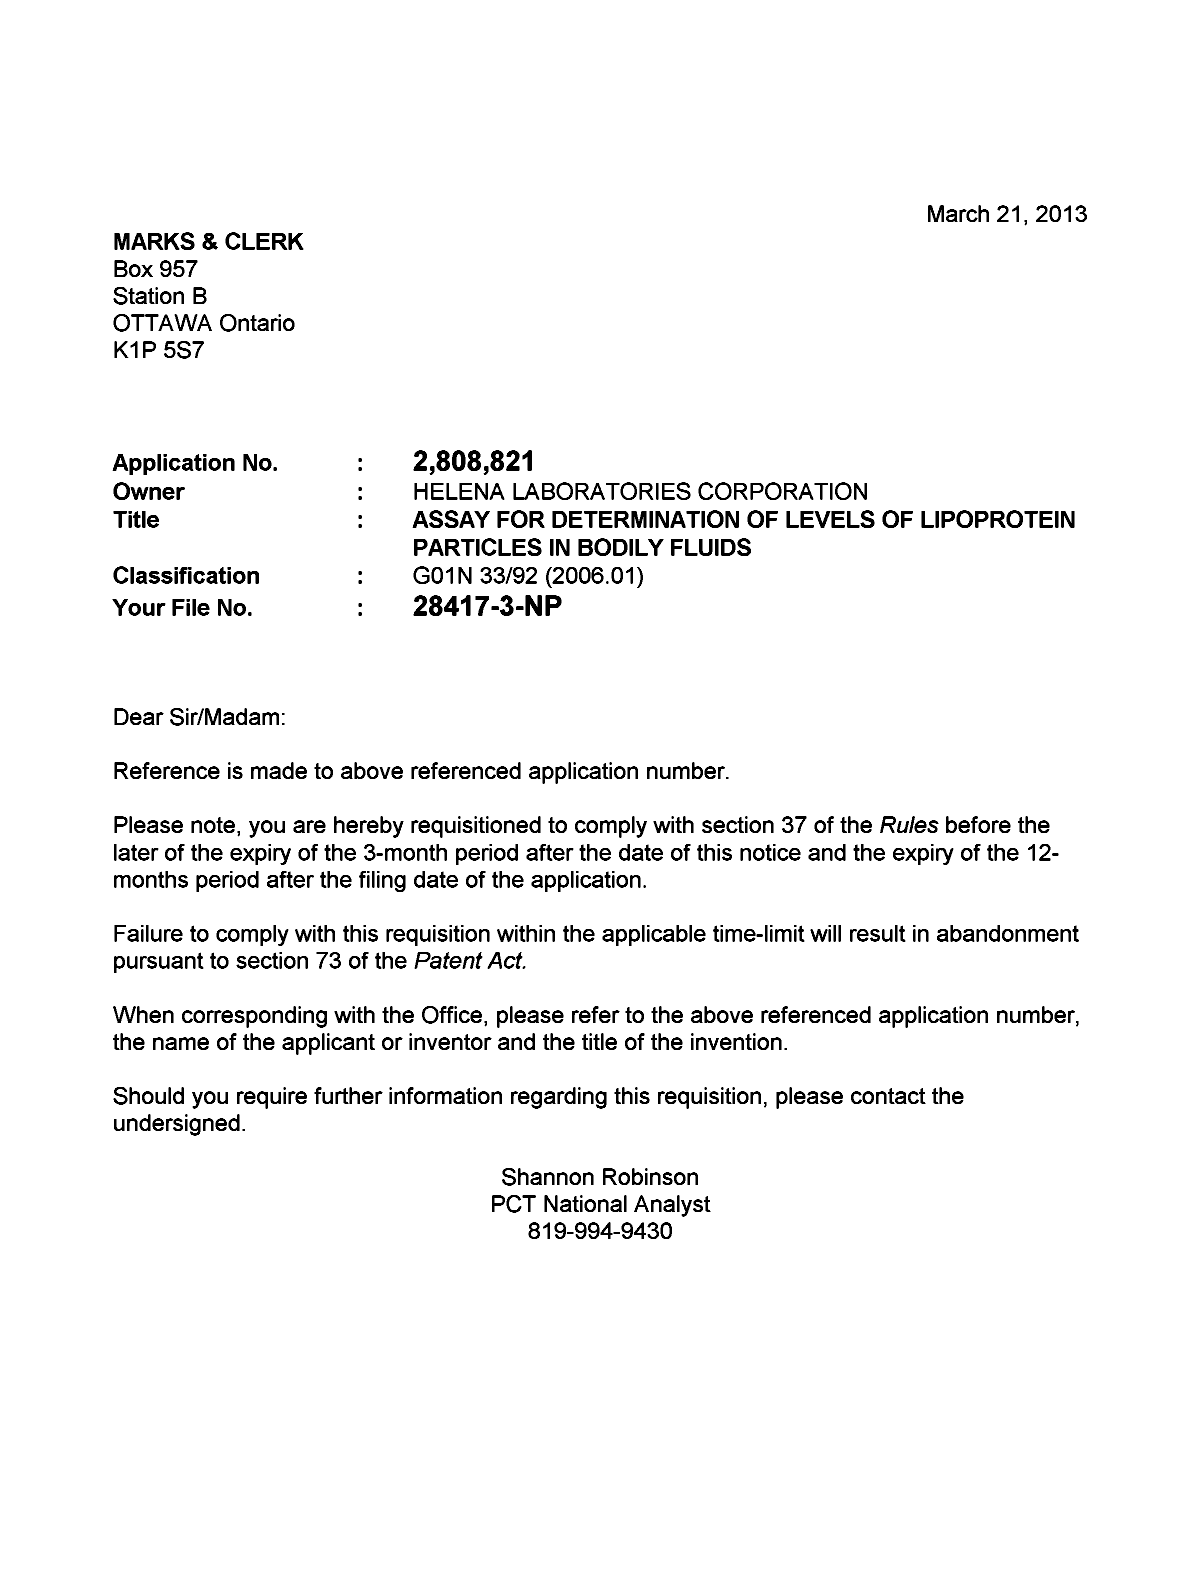 Canadian Patent Document 2808821. Correspondence 20121221. Image 1 of 1